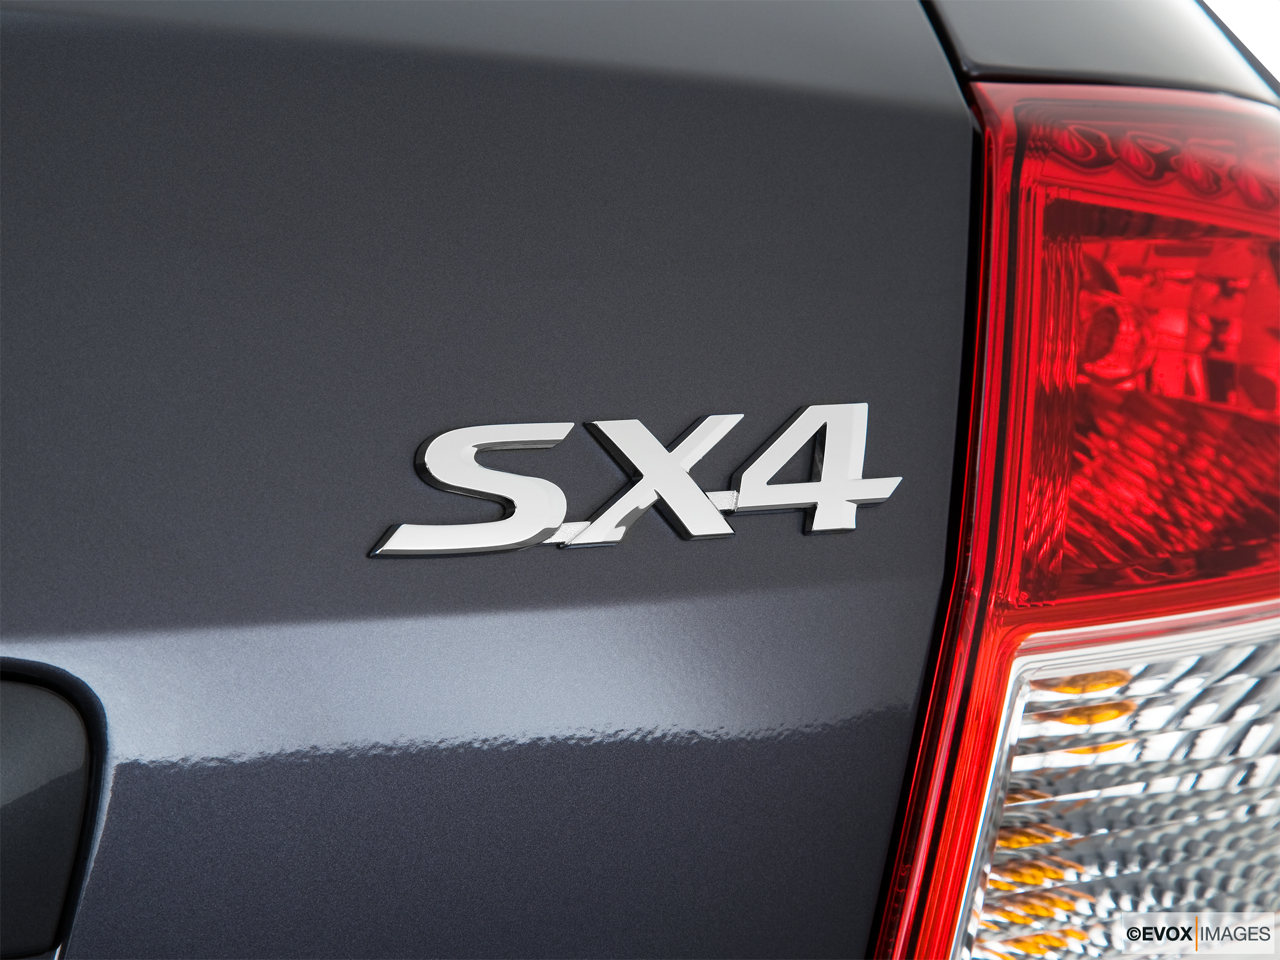 2010 Suzuki SX4 LE Popular Rear model badge/emblem 